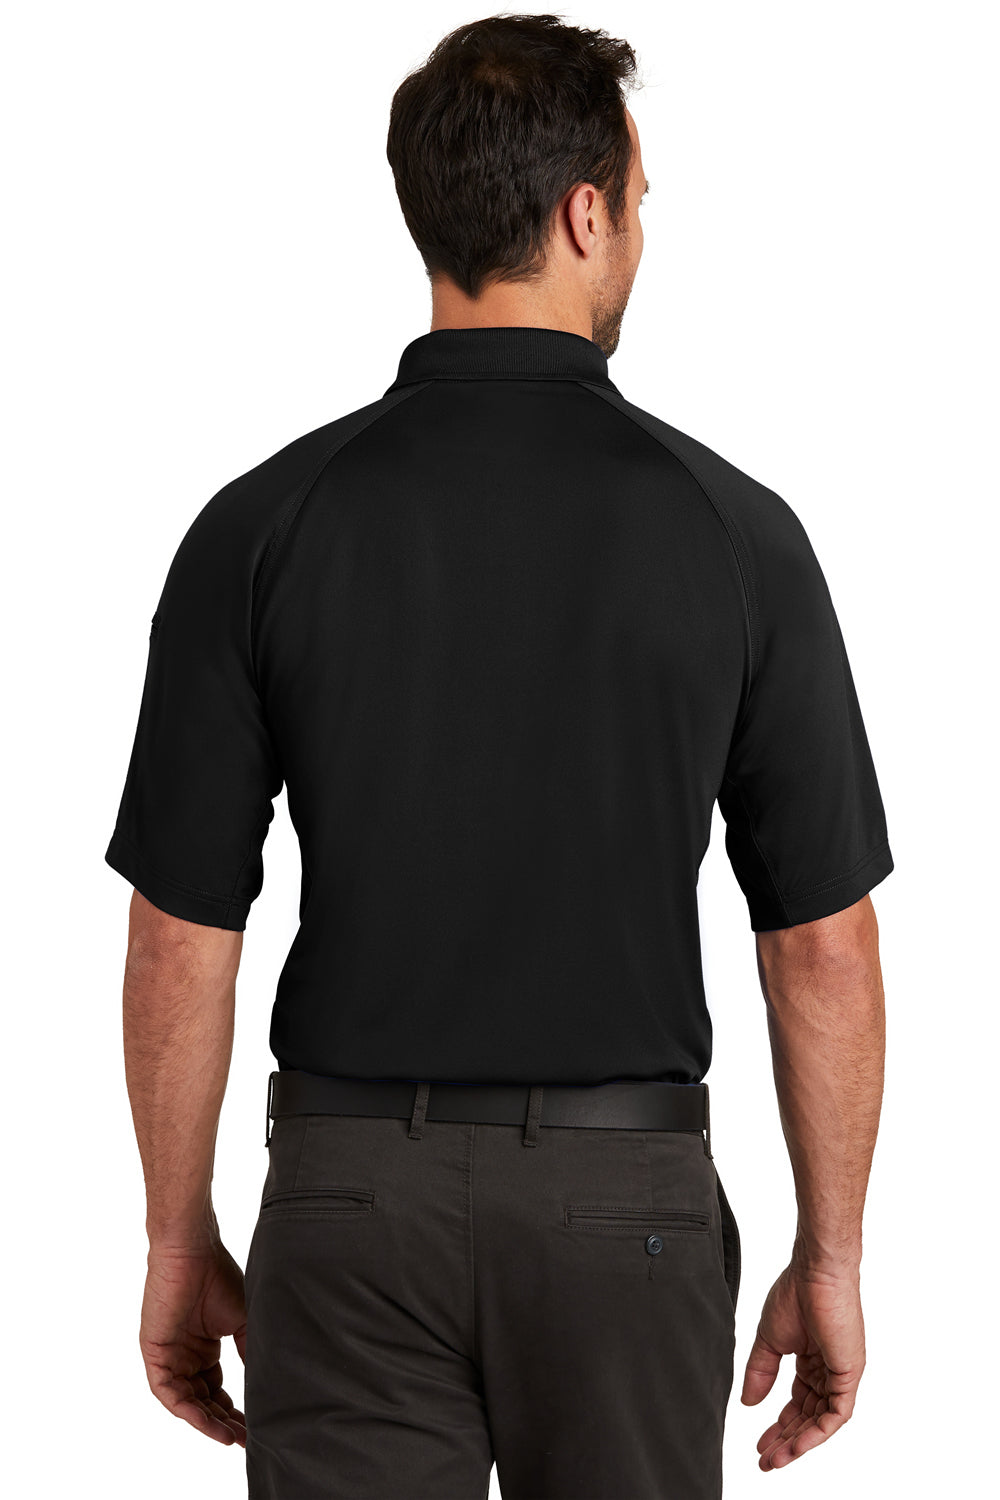 CornerStone CS420 Mens Select Tactical Moisture Wicking Short Sleeve Polo Shirt Black Back